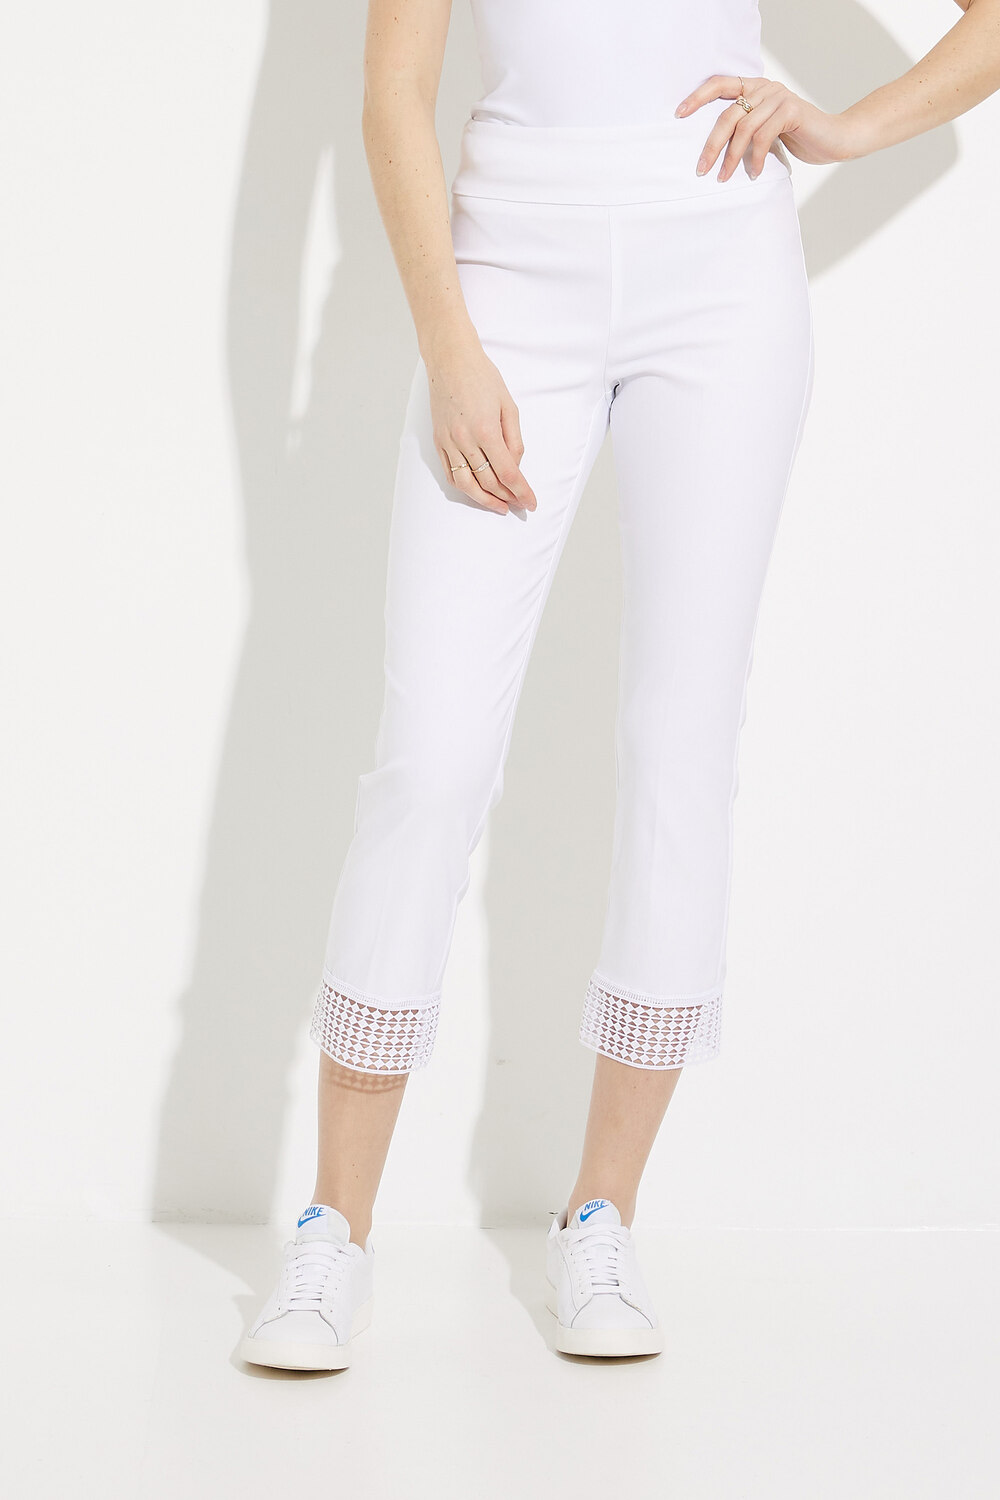 Pantalon coupe courte Modèle 232249 . Blanc